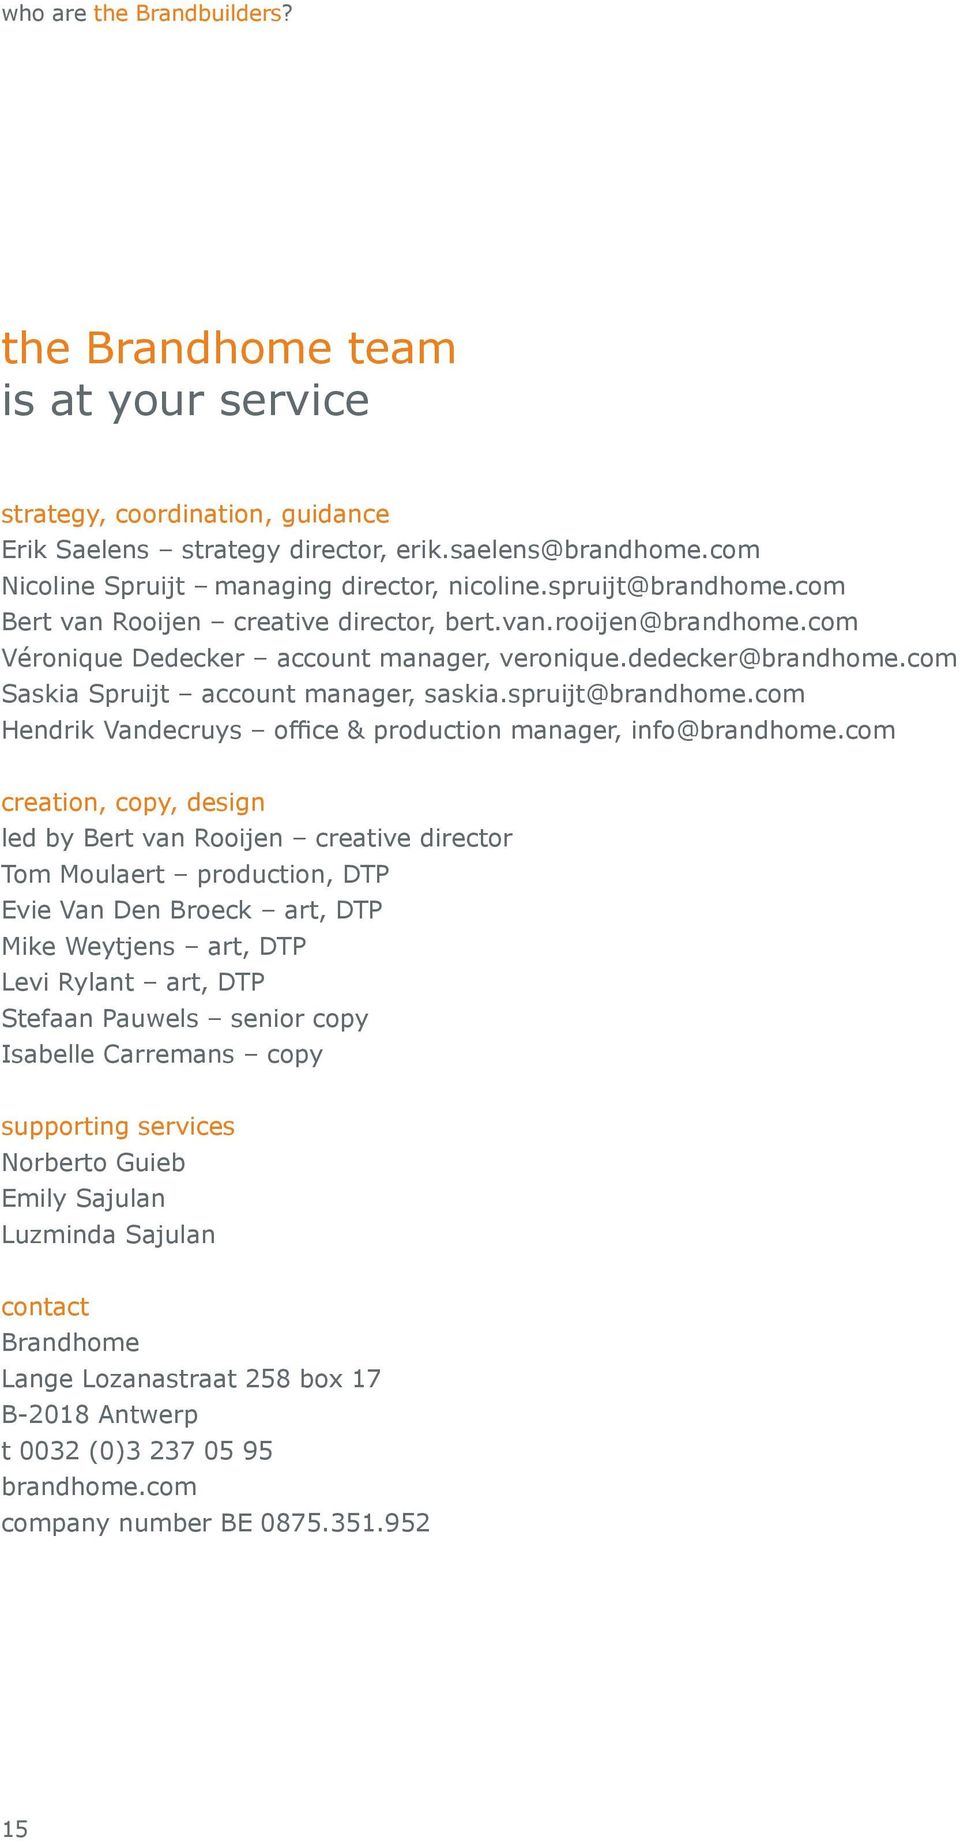 dedecker@brandhome.com Saskia Spruijt account manager, saskia.spruijt@brandhome.com Hendrik Vandecruys office & production manager, info@brandhome.